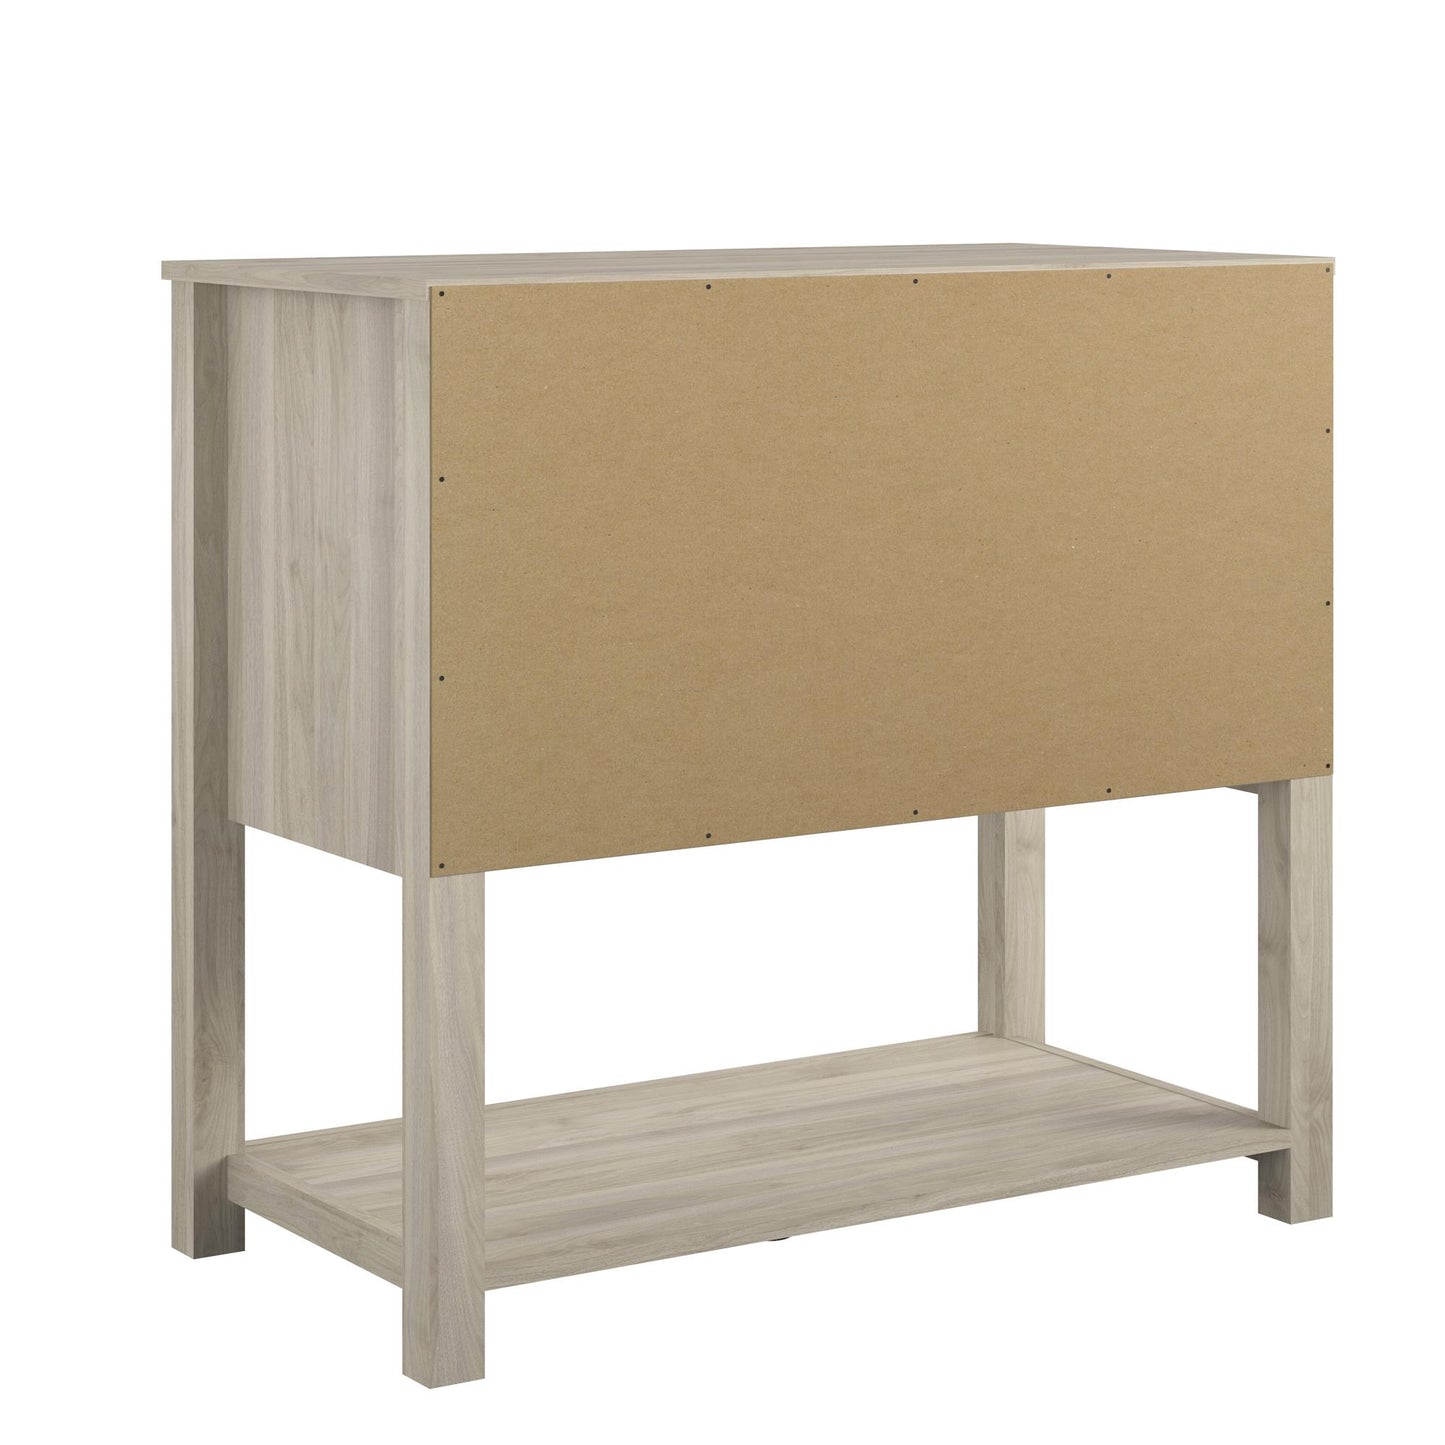 Sierra Ridge Levi Kids’ 3 Drawer Dresser and Lower Shelf - Light Walnut